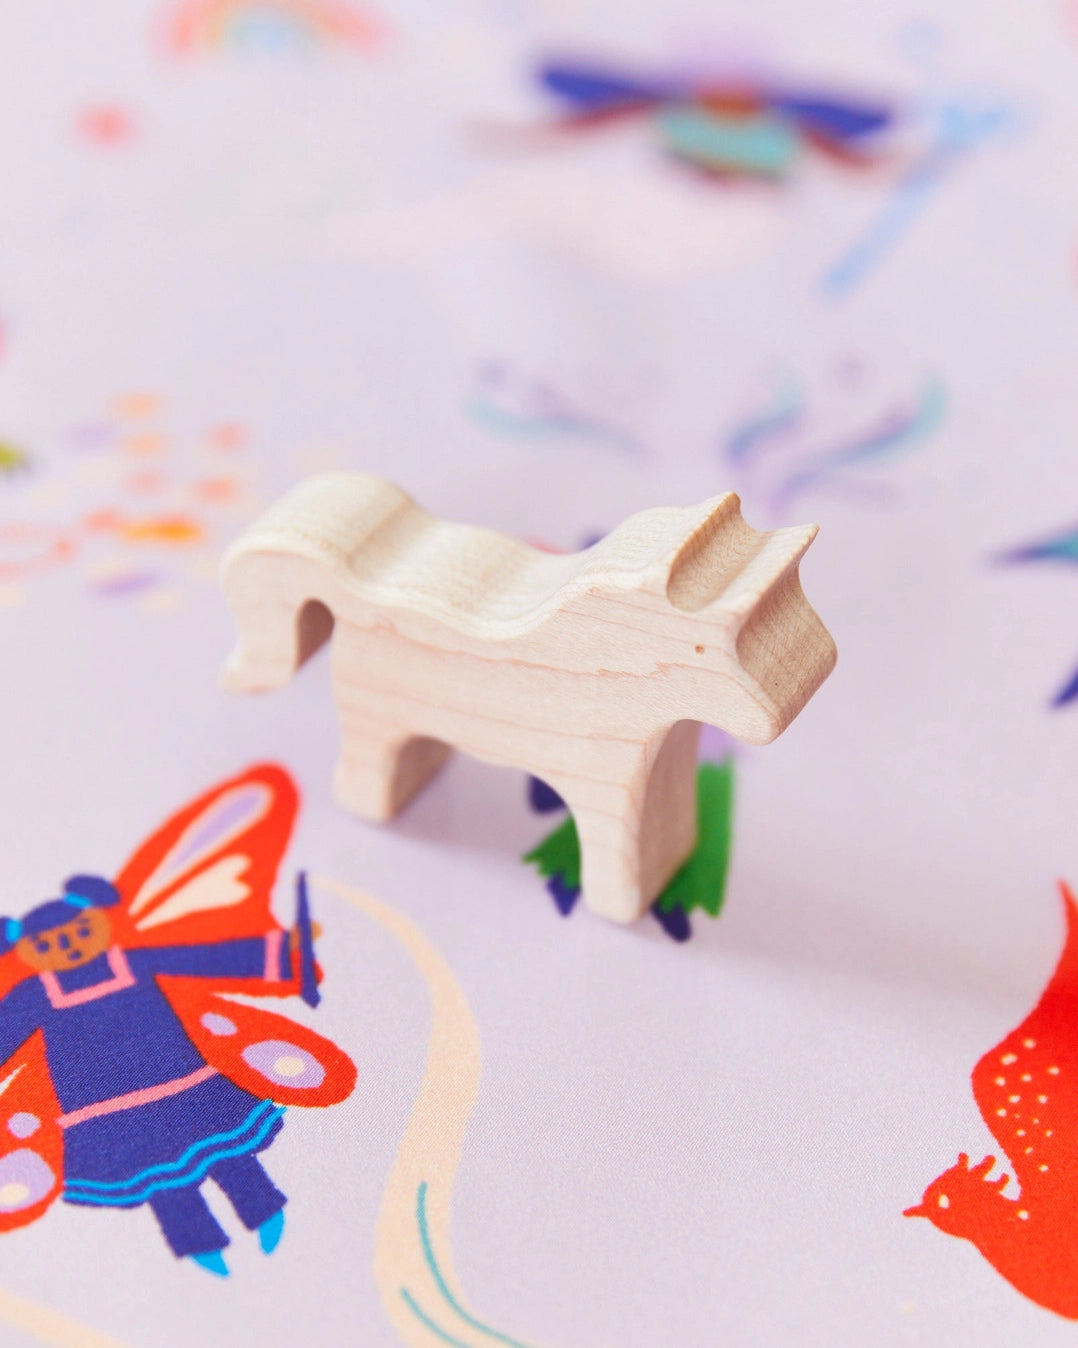 Maple wood unicorn on a playsilk